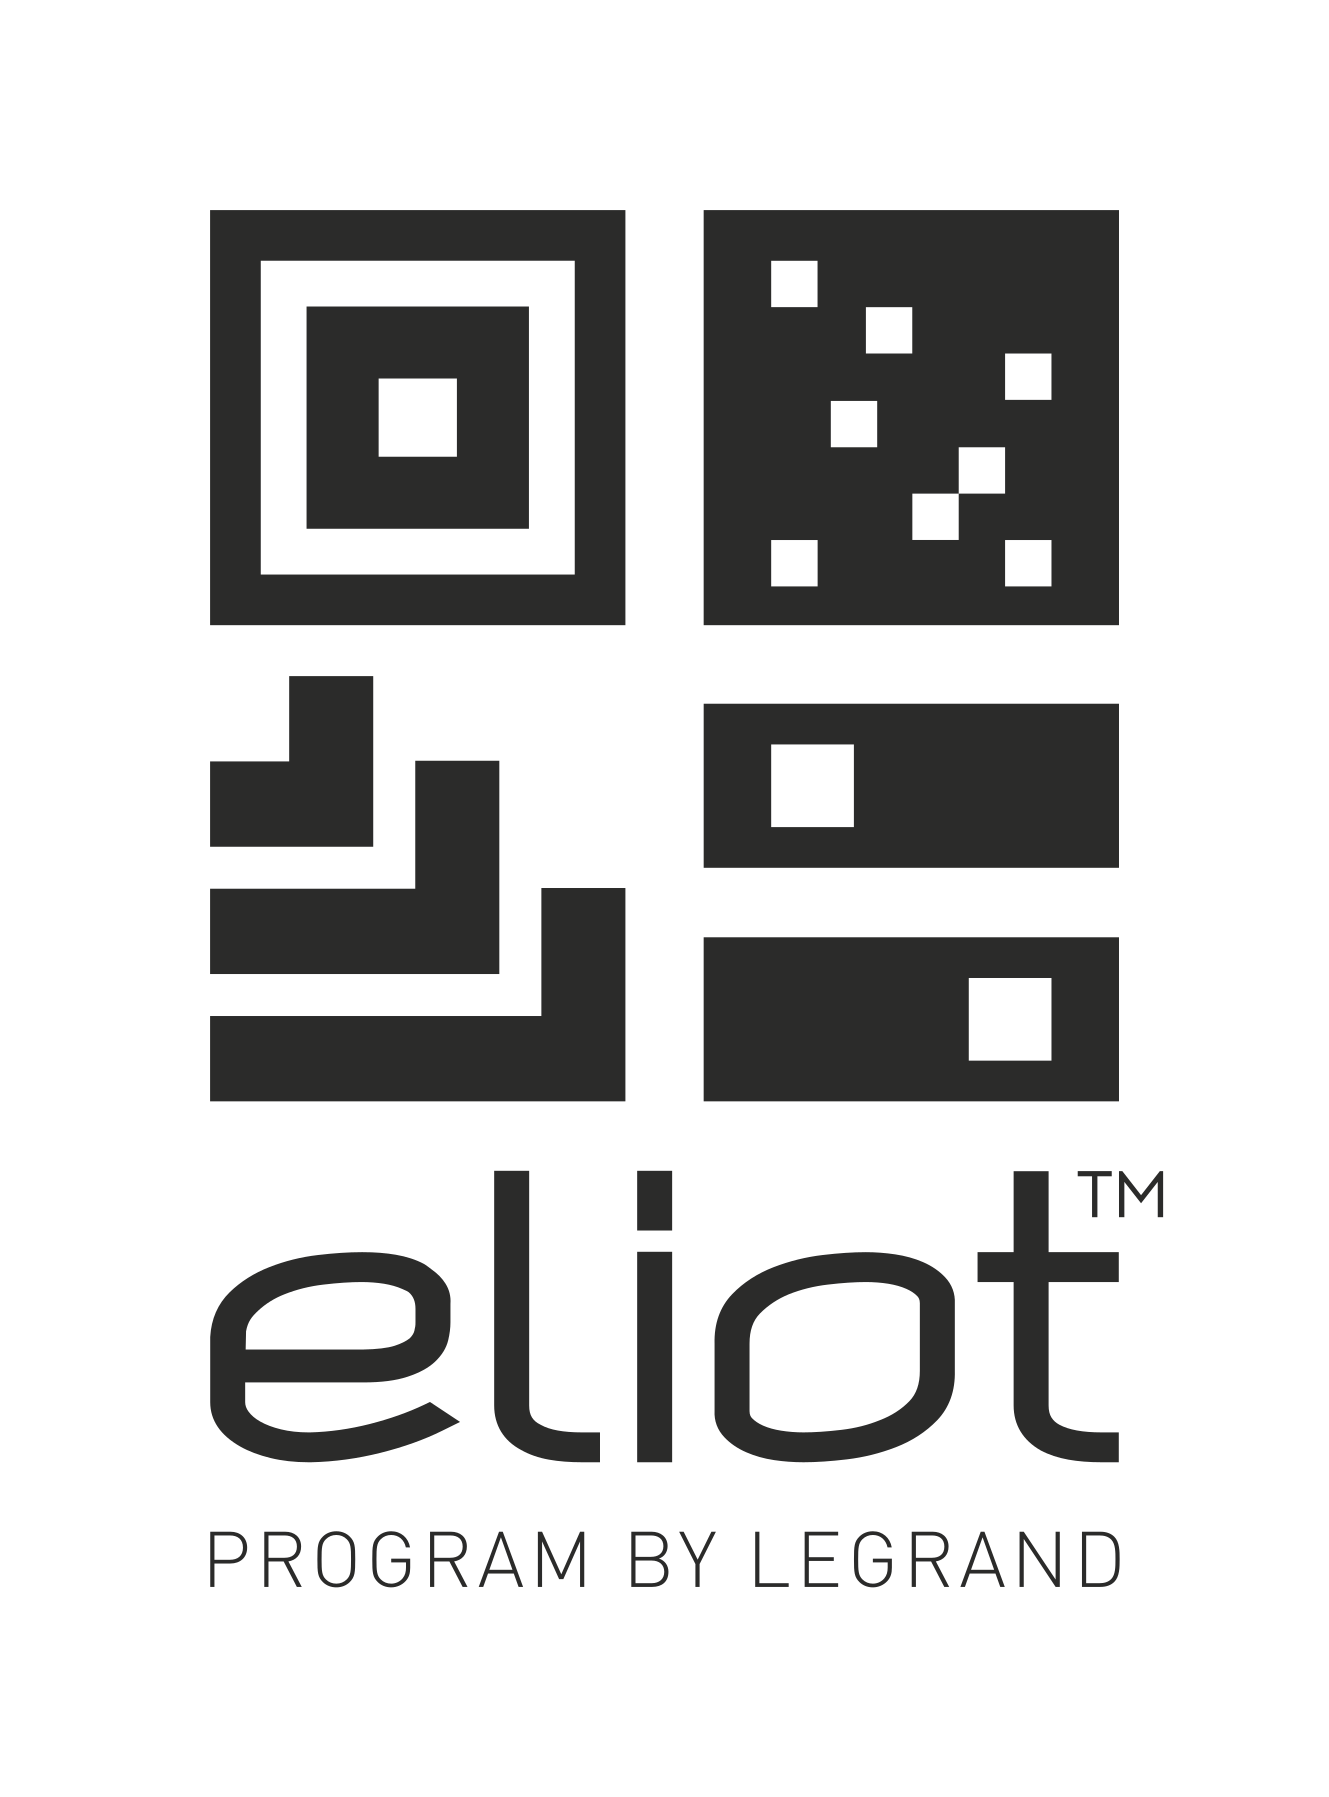 Legrand Eliot Logo